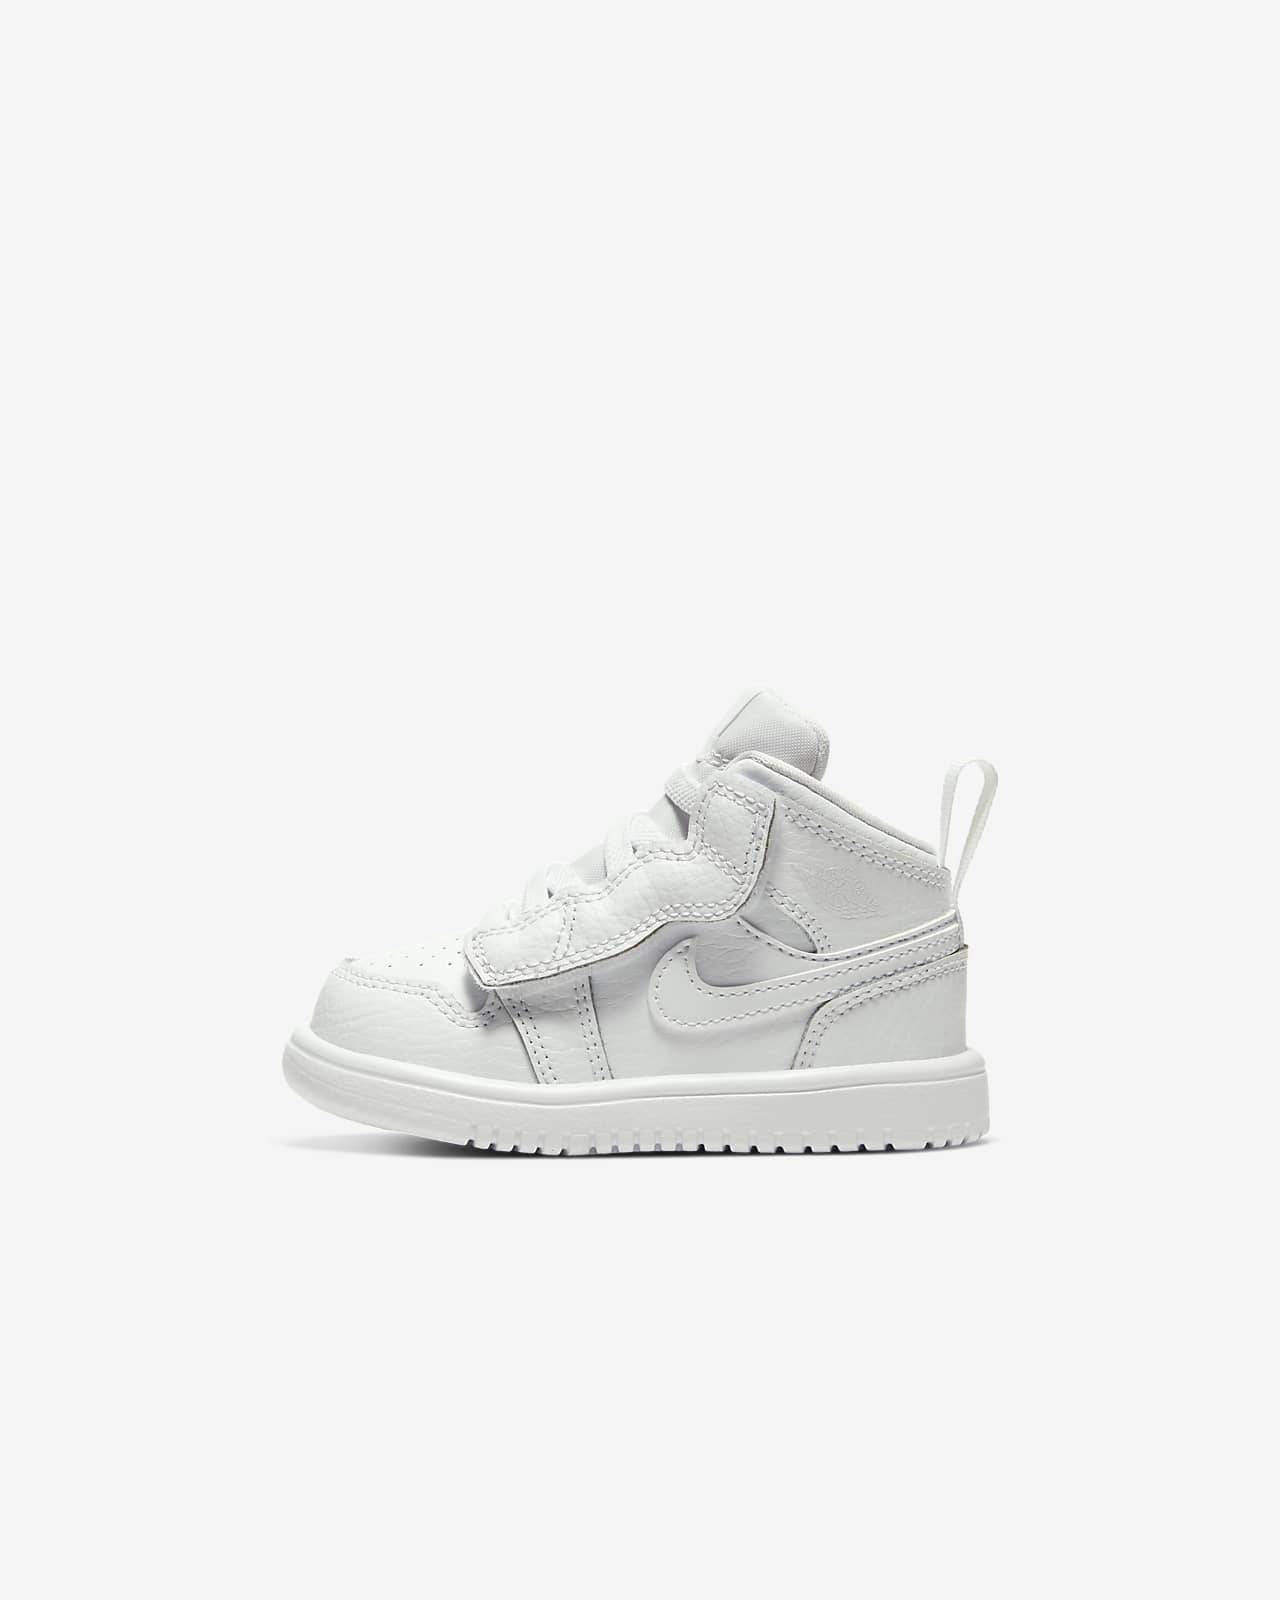 Jordan 1 Mid Baby and Toddler Shoe. Nike SK